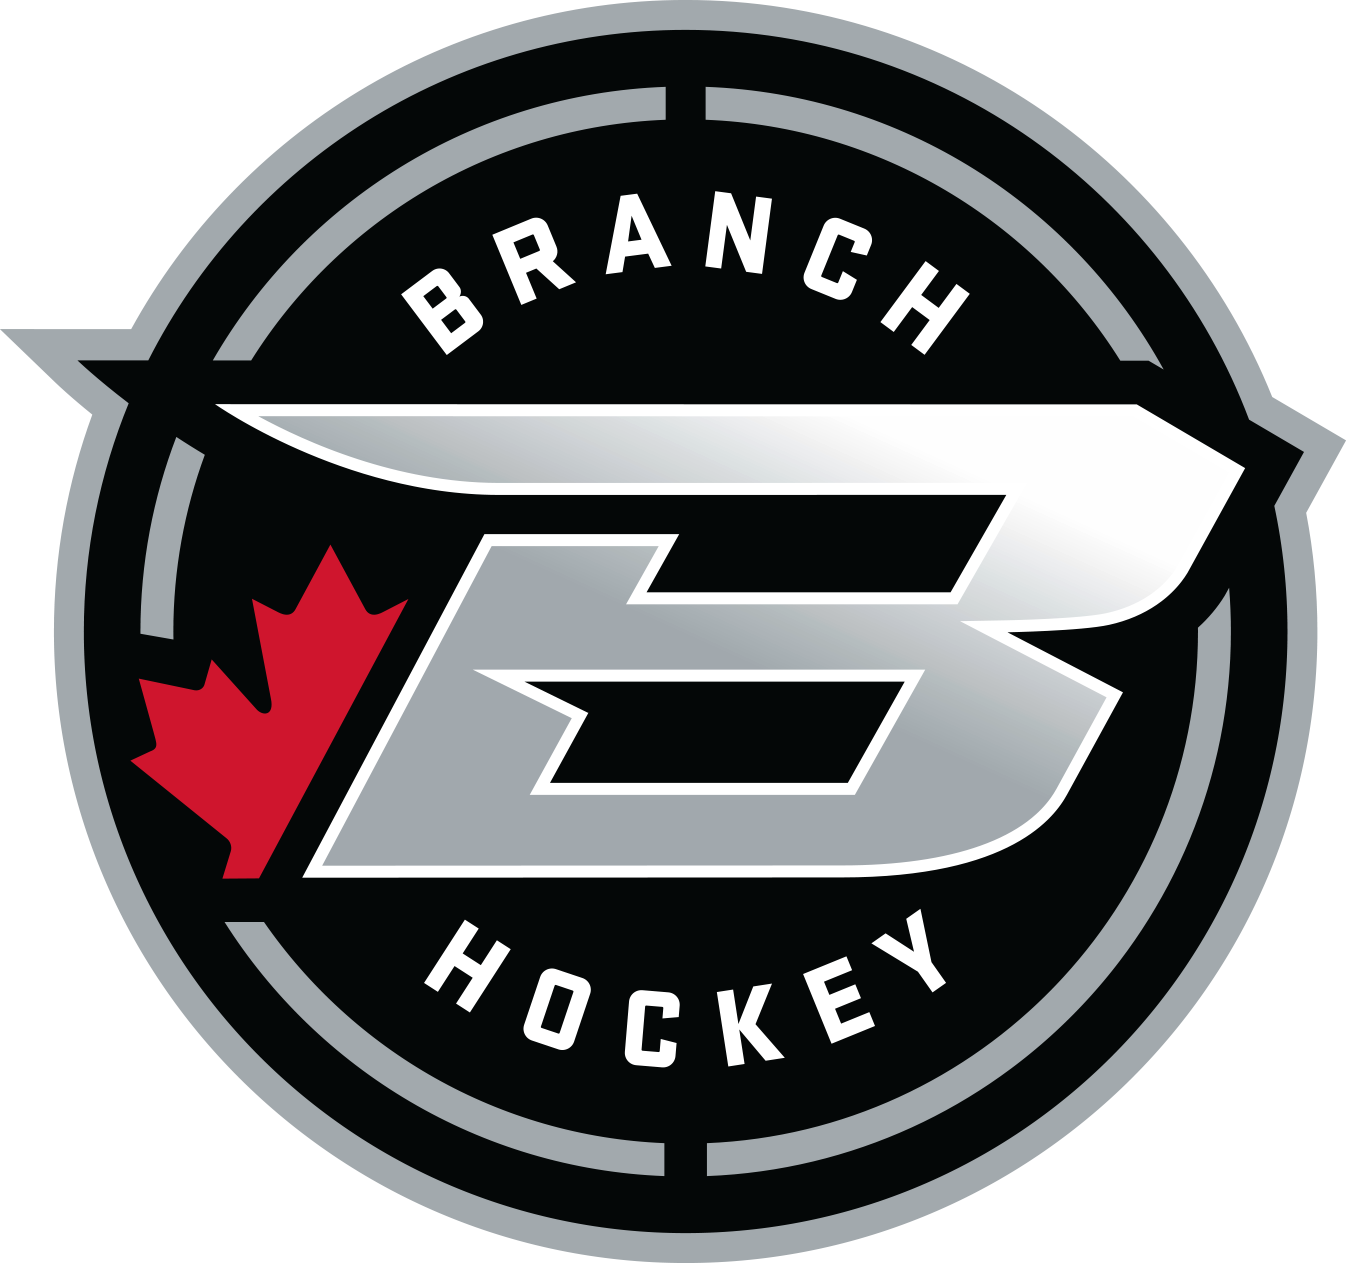 SUMMER SHOWCASE LEAGUE by Branch Hockey